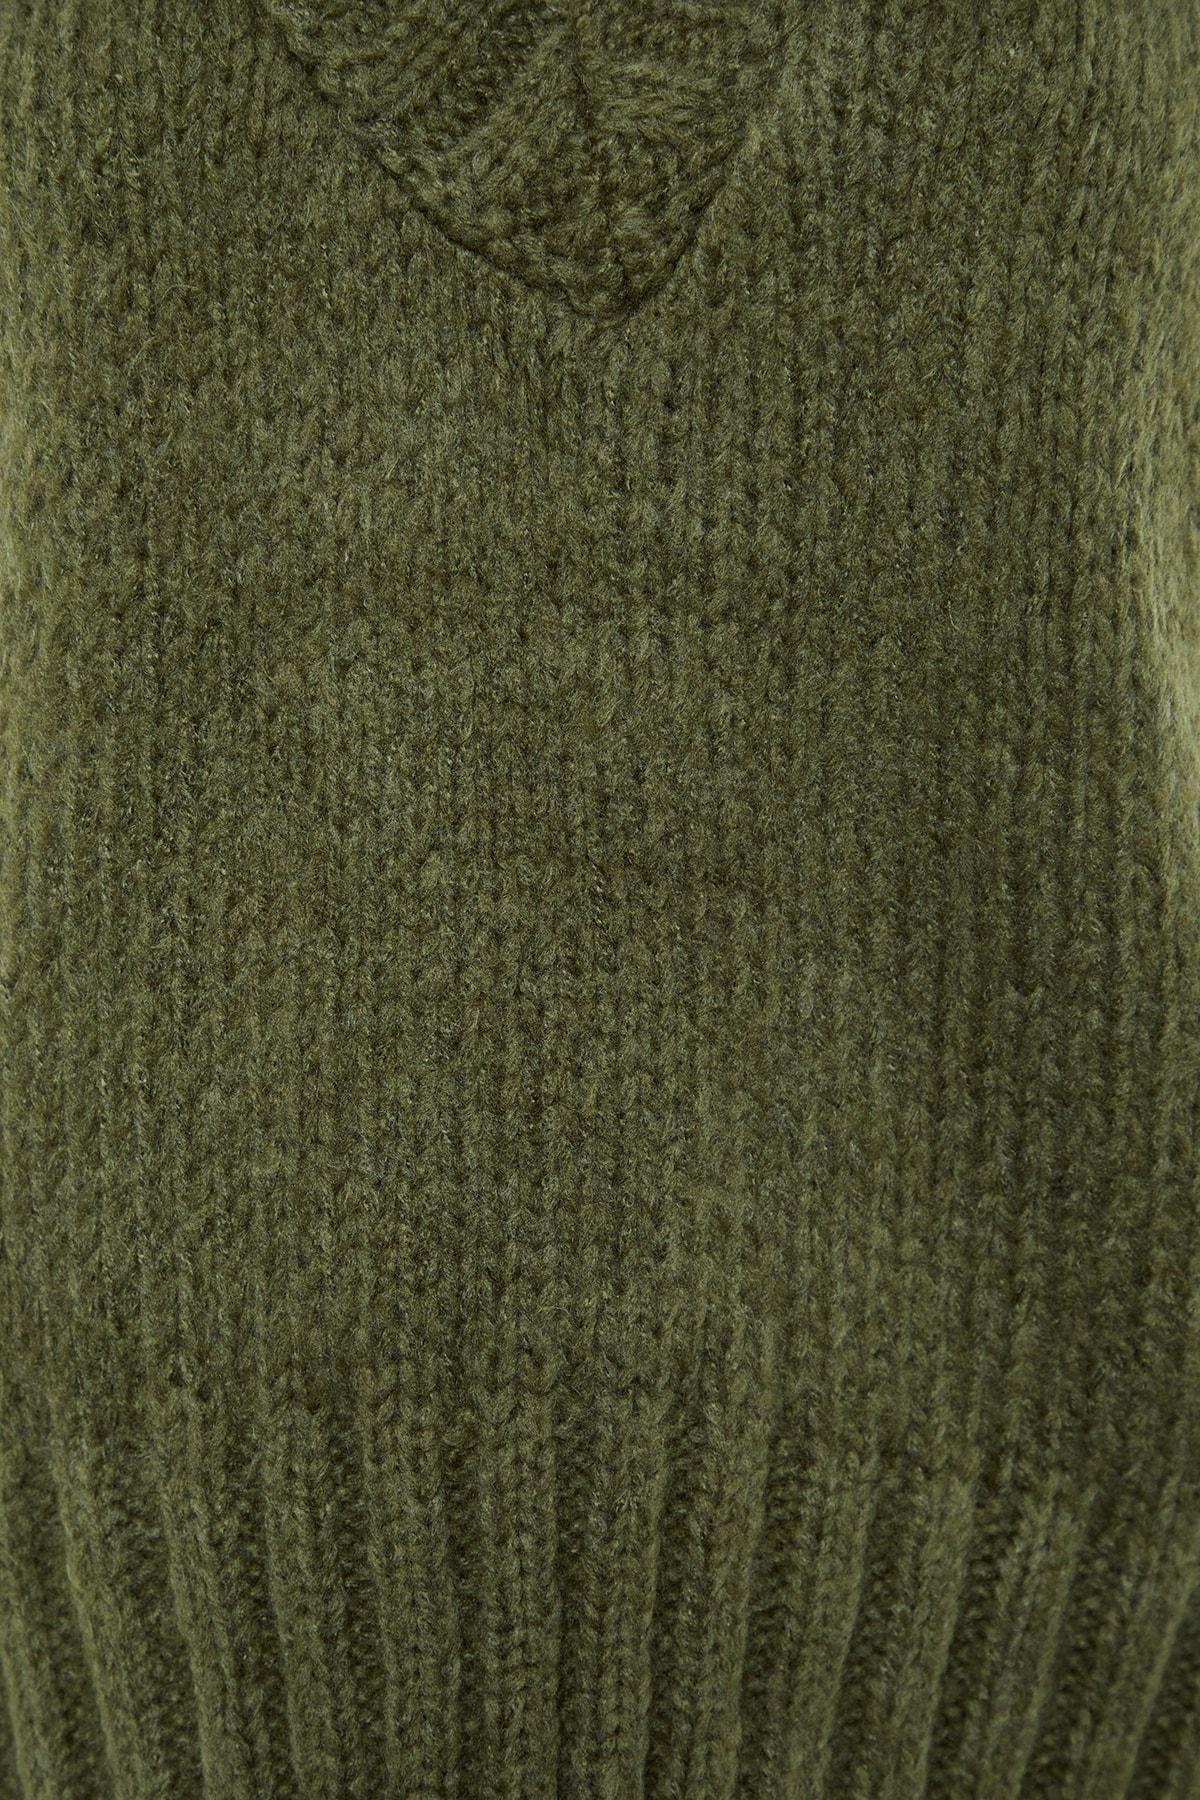 Trendyol - Khaki Knitted Sweater